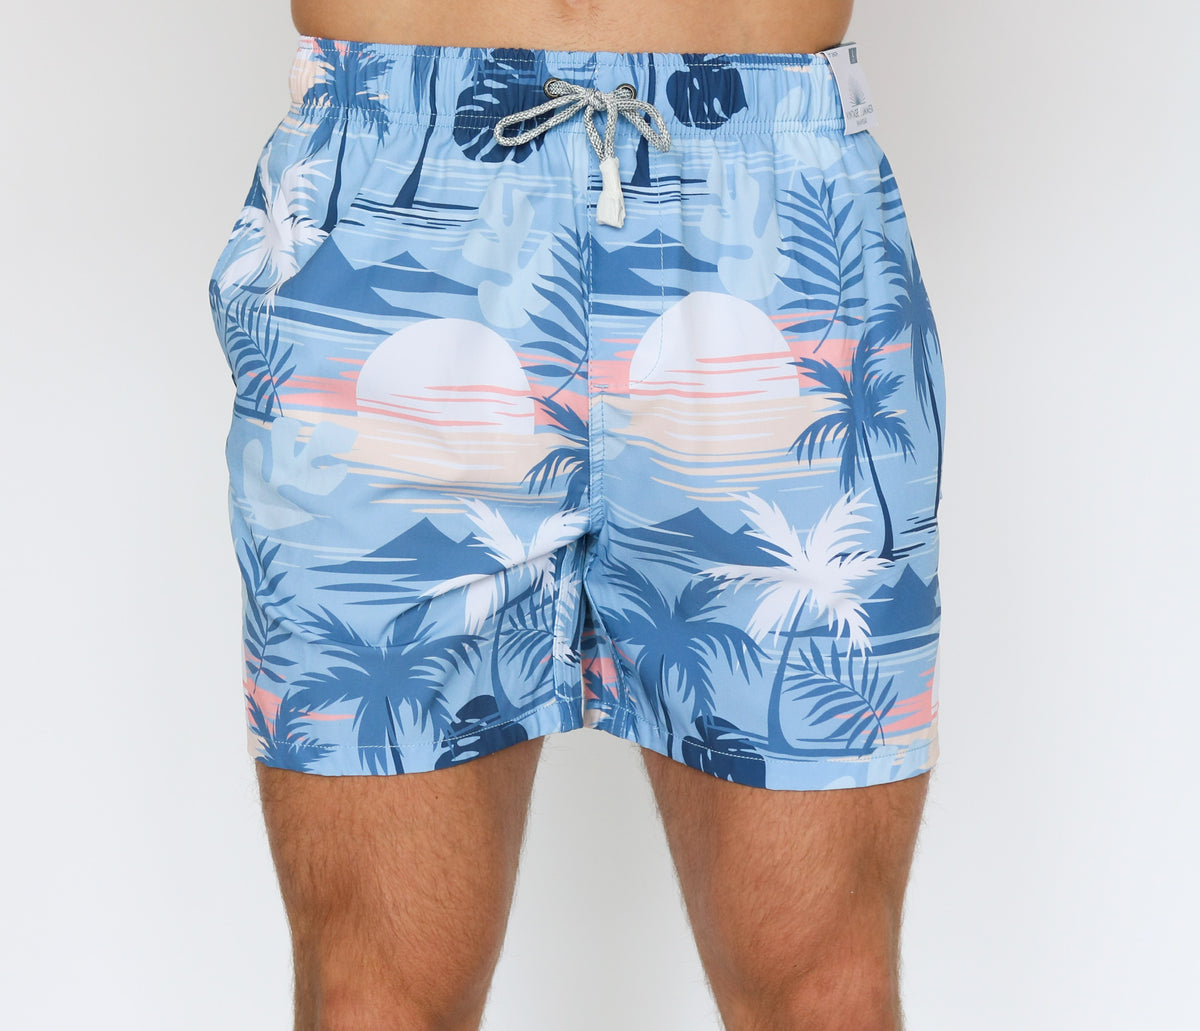 Vintage Summer Swim Shorts